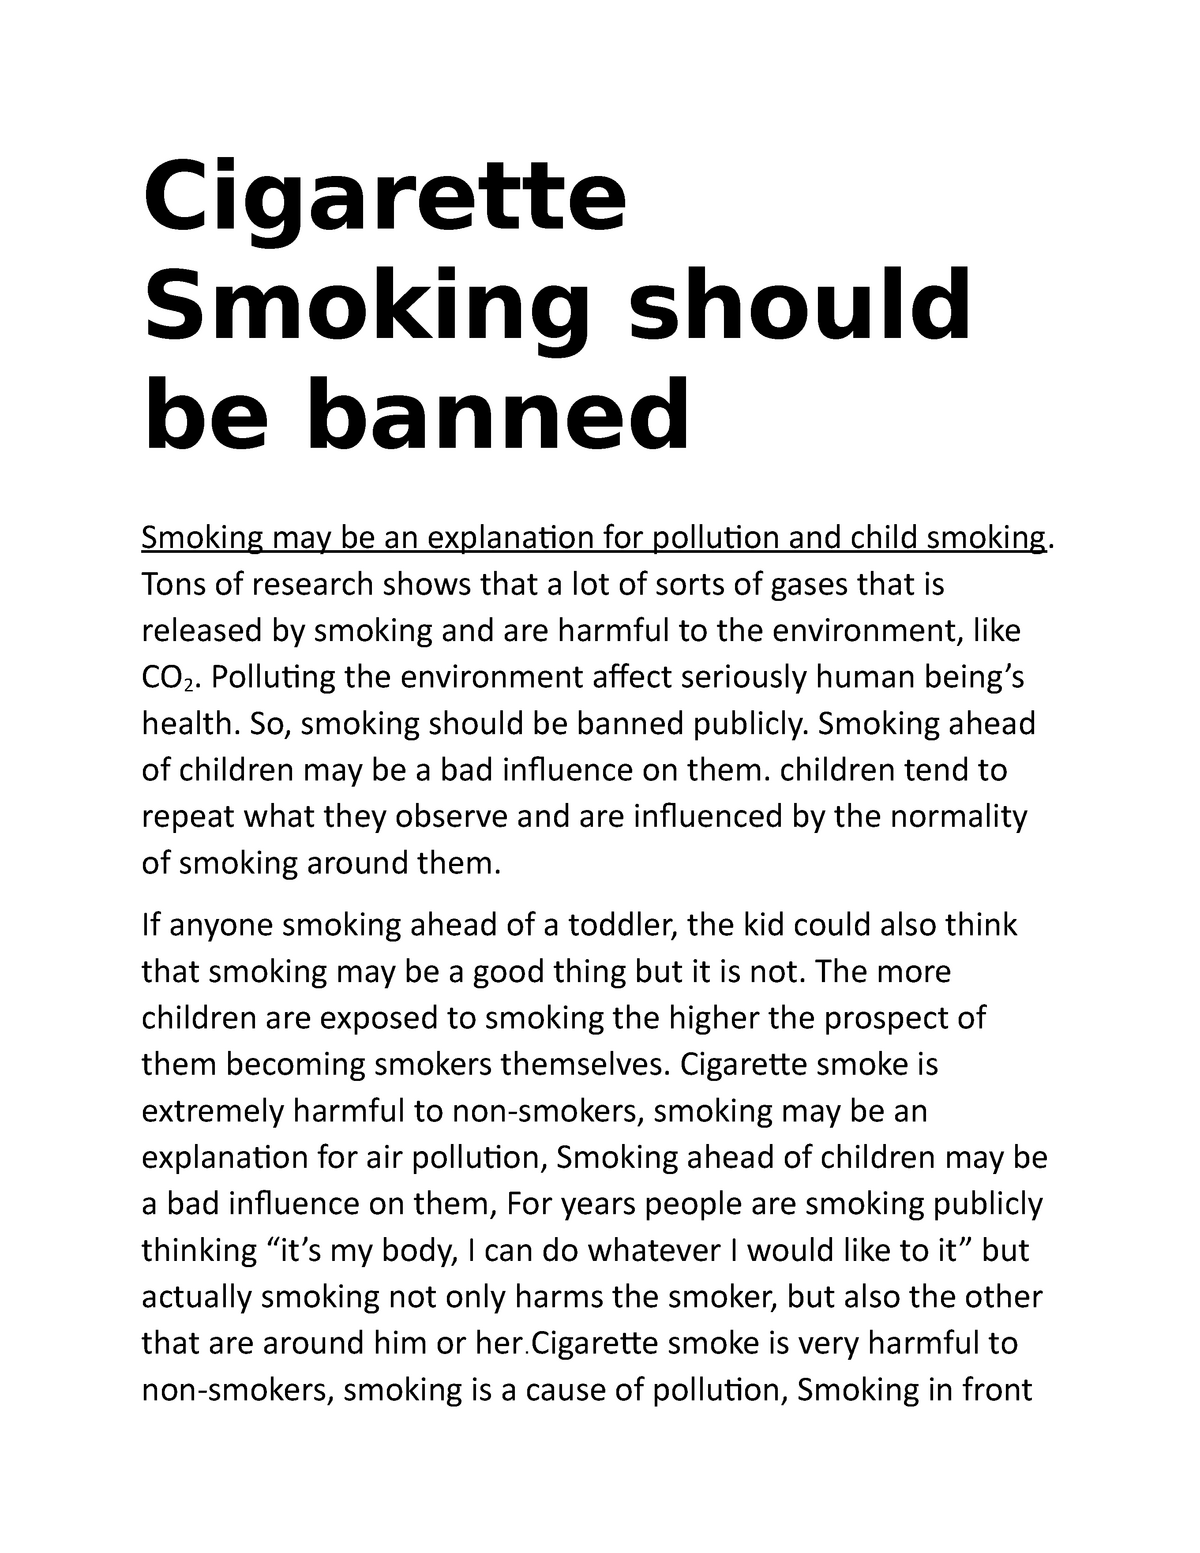 smoking solutions essay